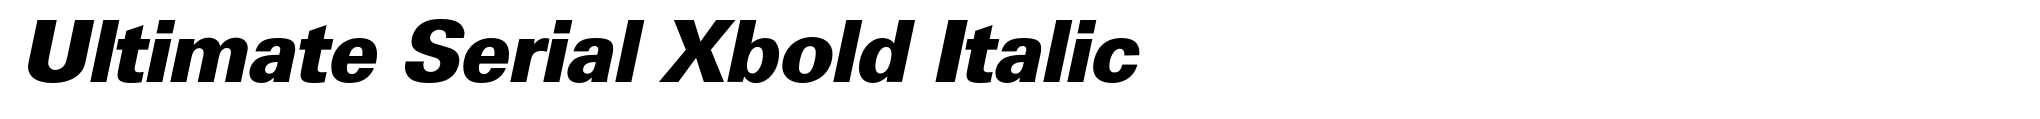 Ultimate Serial Xbold Italic image